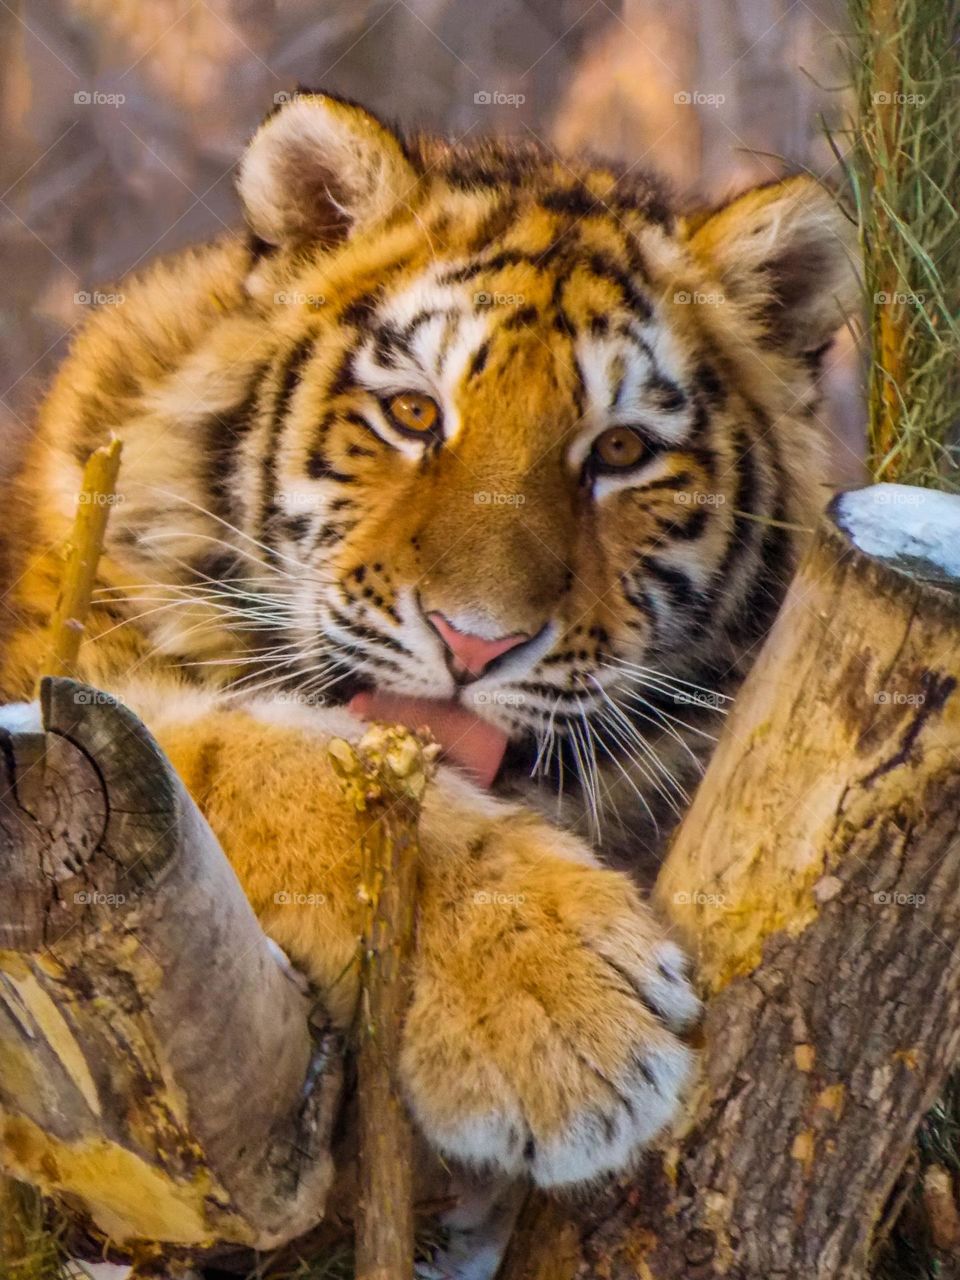 Amur tiger cub. These striped predators grow throughout their lives.